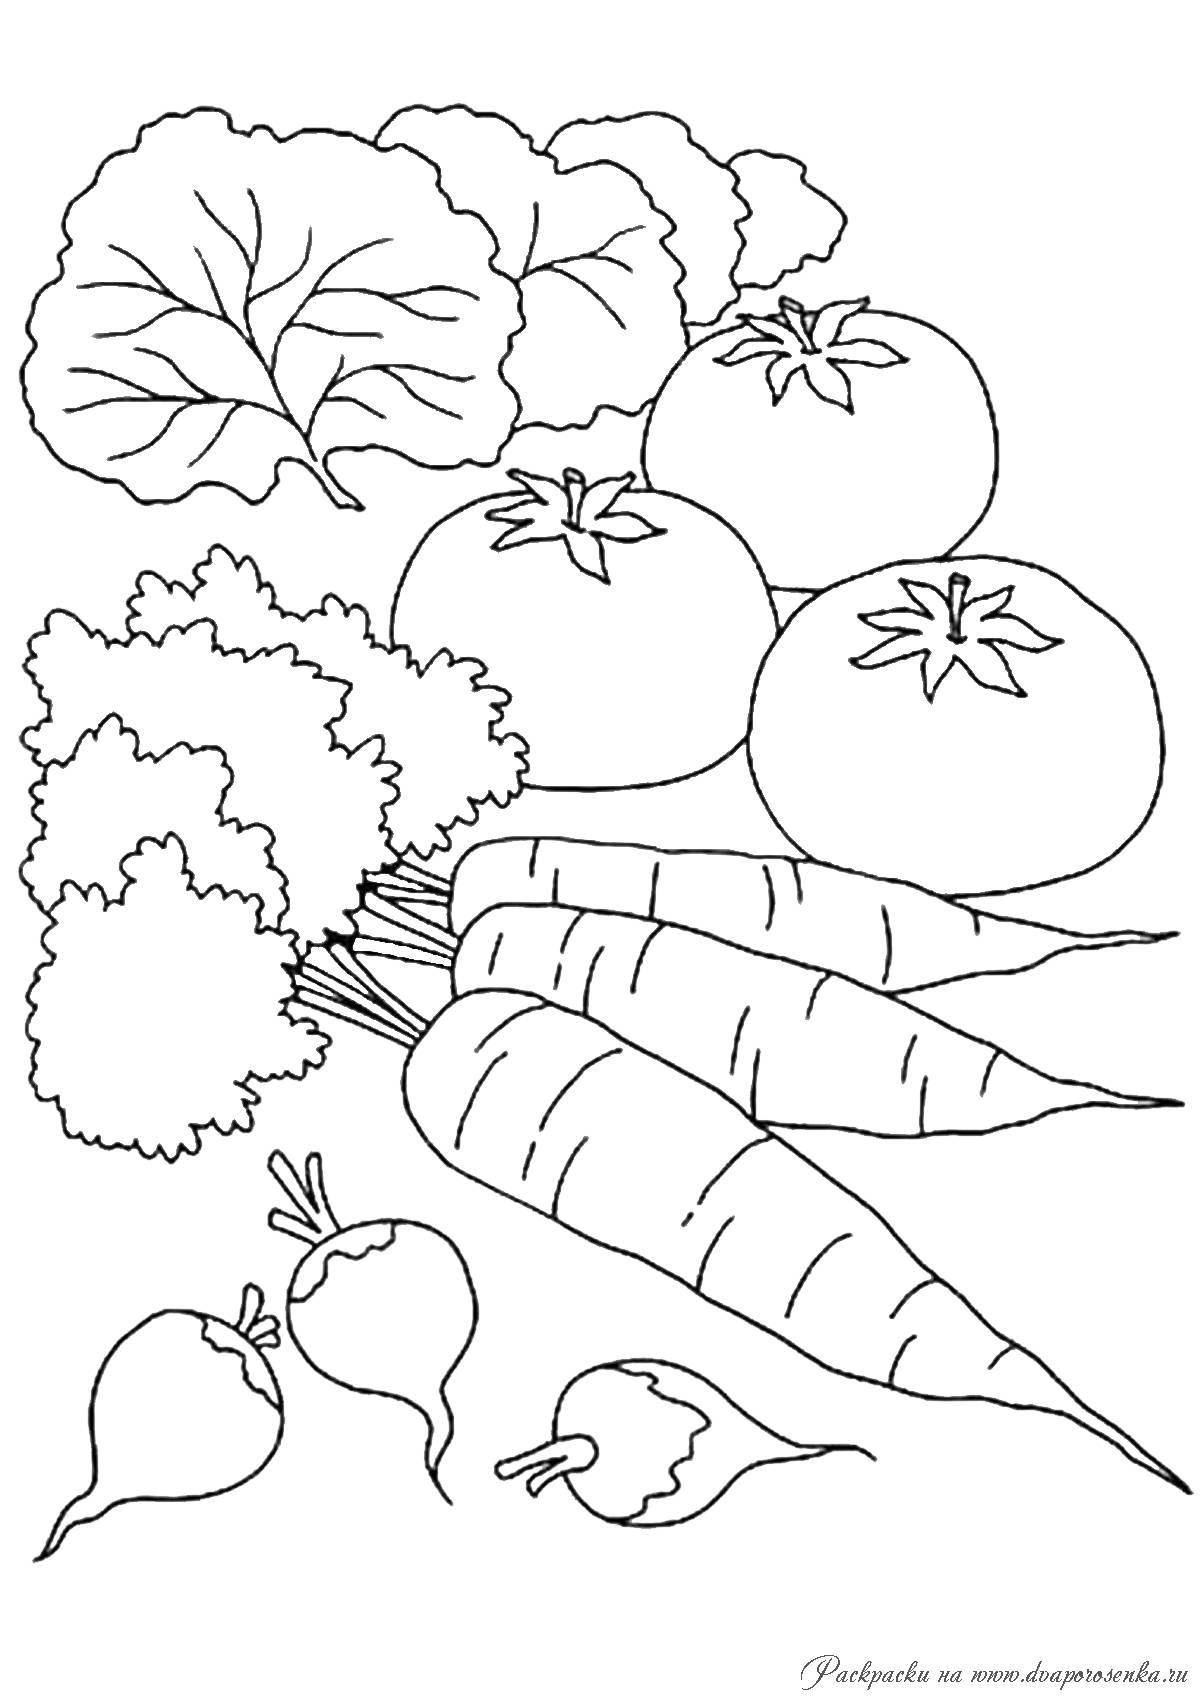 Joyful vegetable coloring for tikes